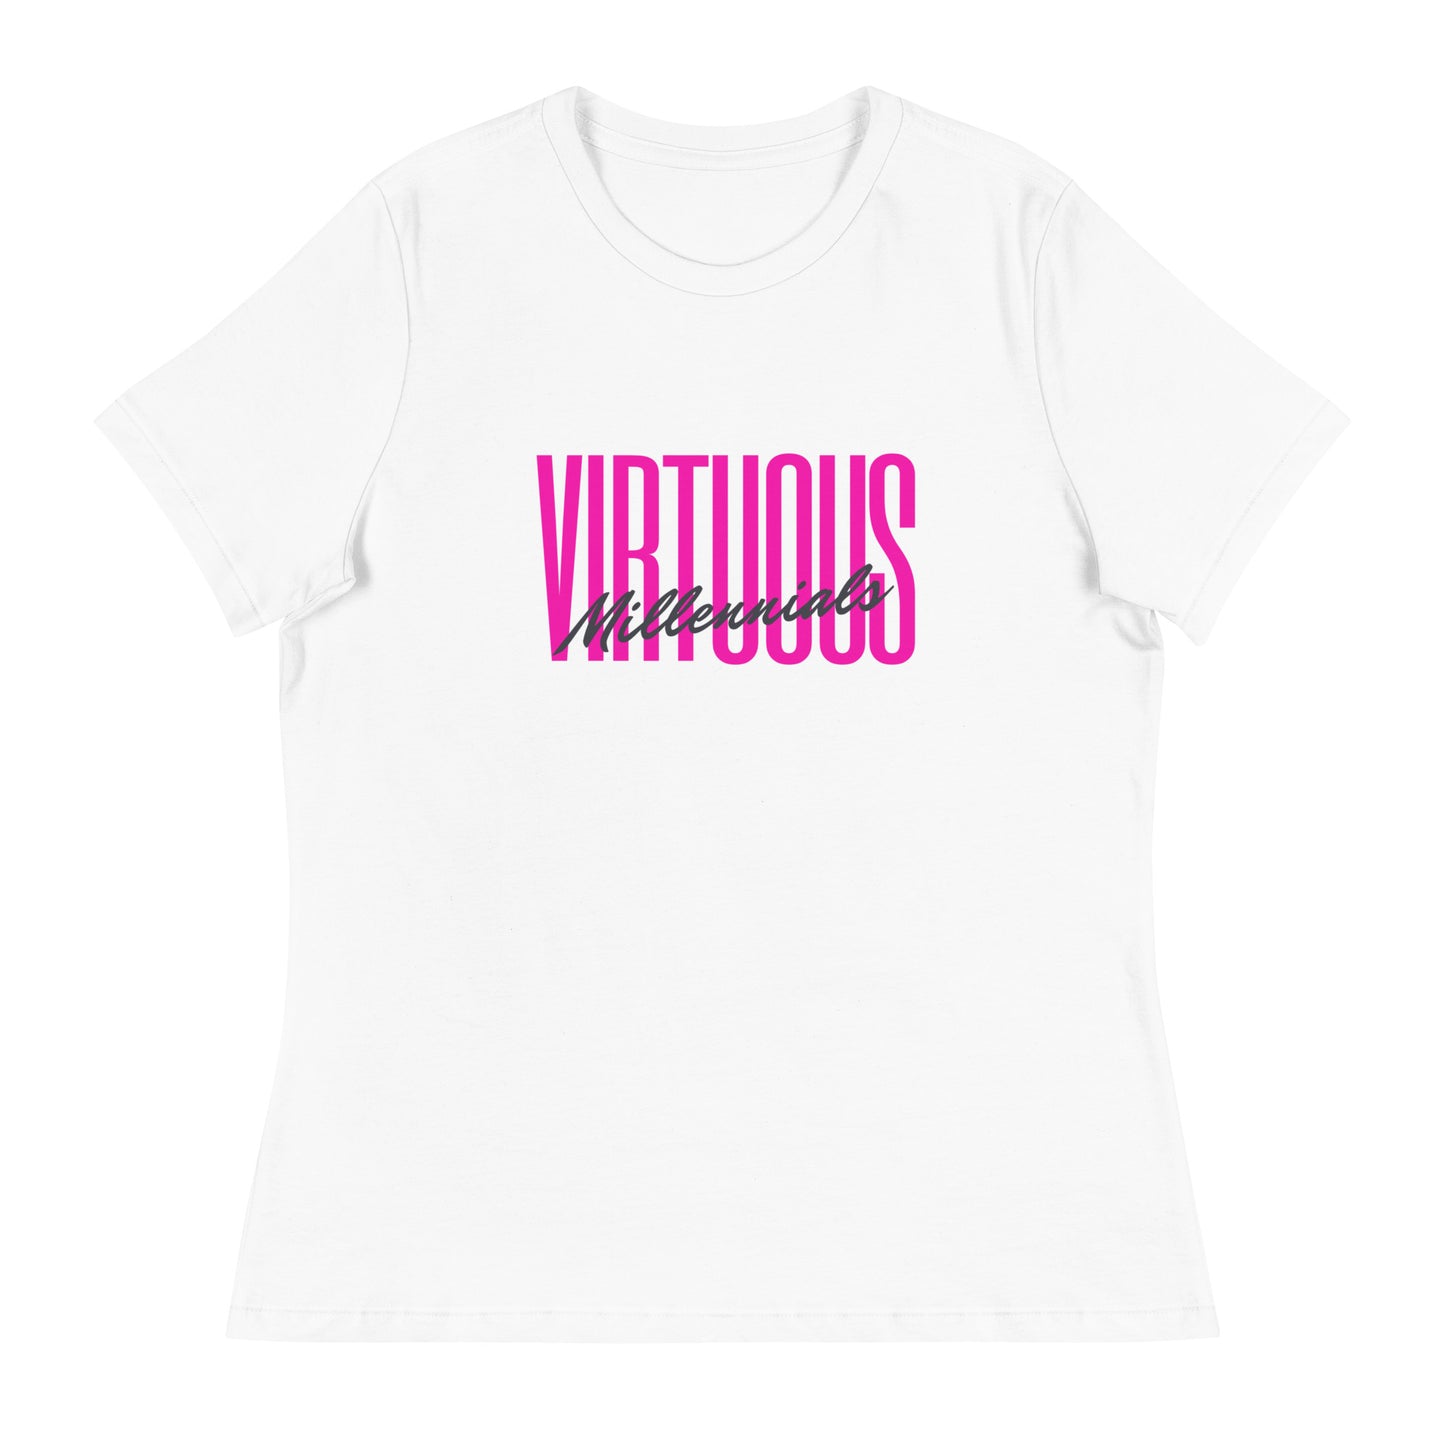 Virtuous Millennials Signature T-Shirt